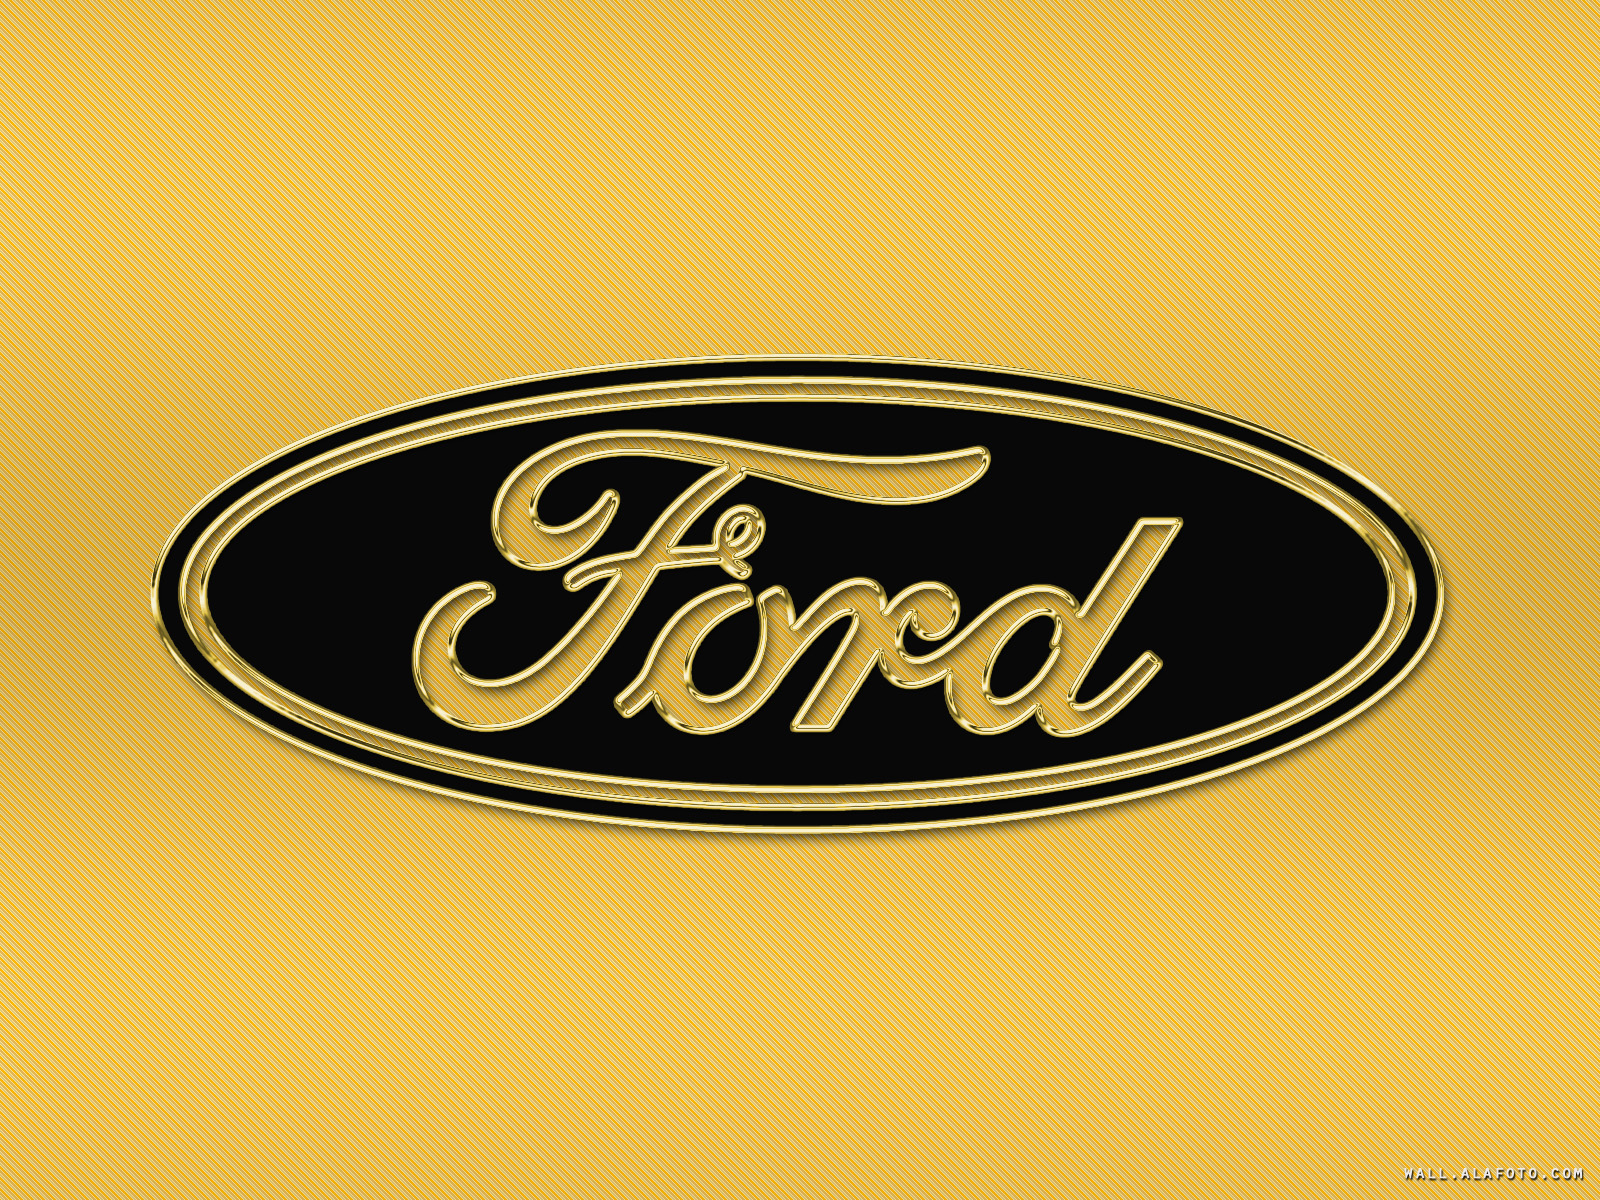 Ford Cars Logos   Ford logo 101   Alafoto Wallpapers 1600x1200